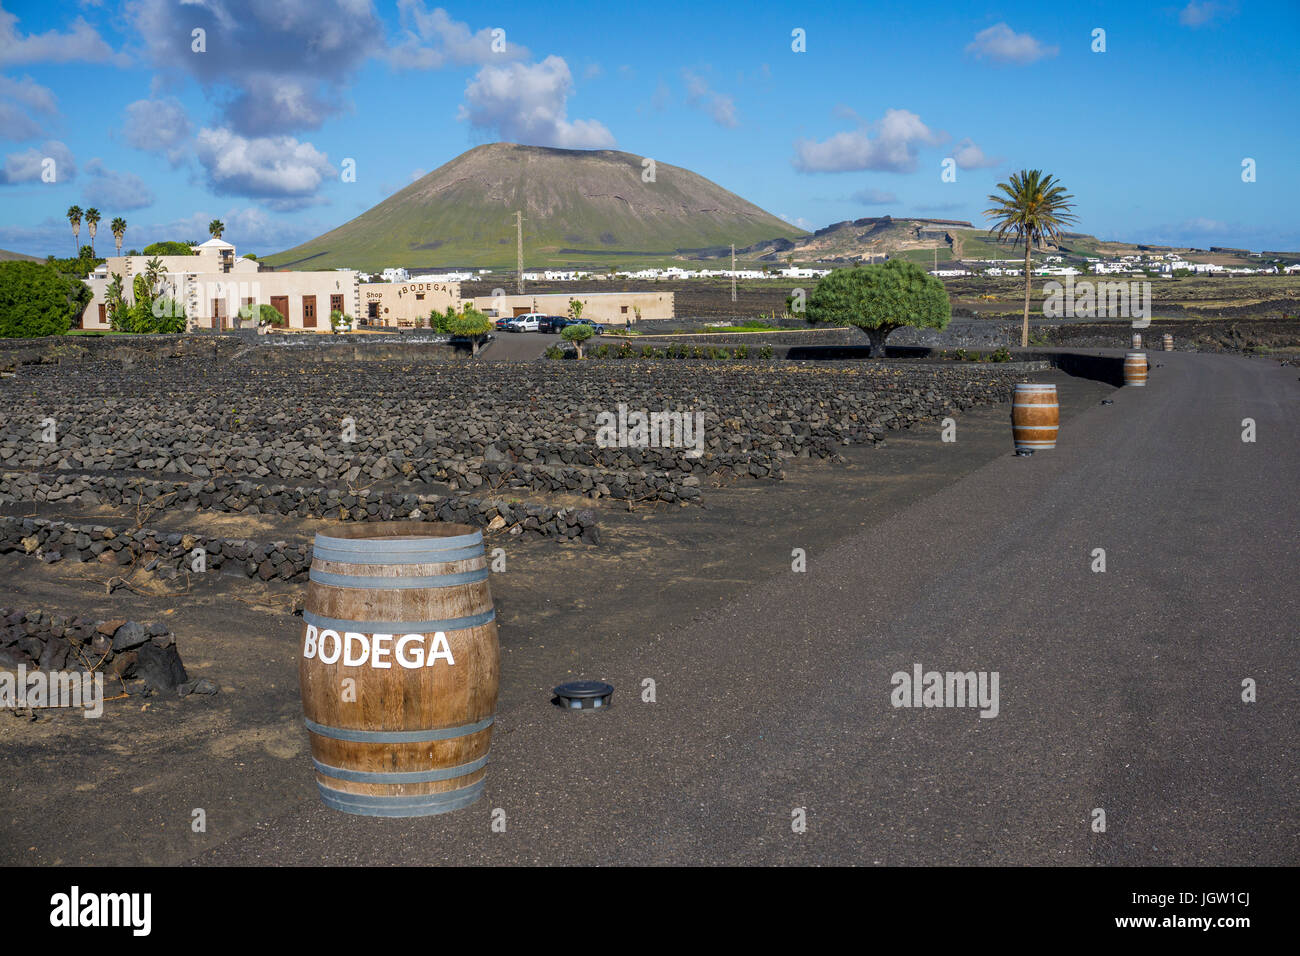 Bodega Barreto, La Geria, Lanzarote island, Canary islands, Spain, Europe Stock Photo